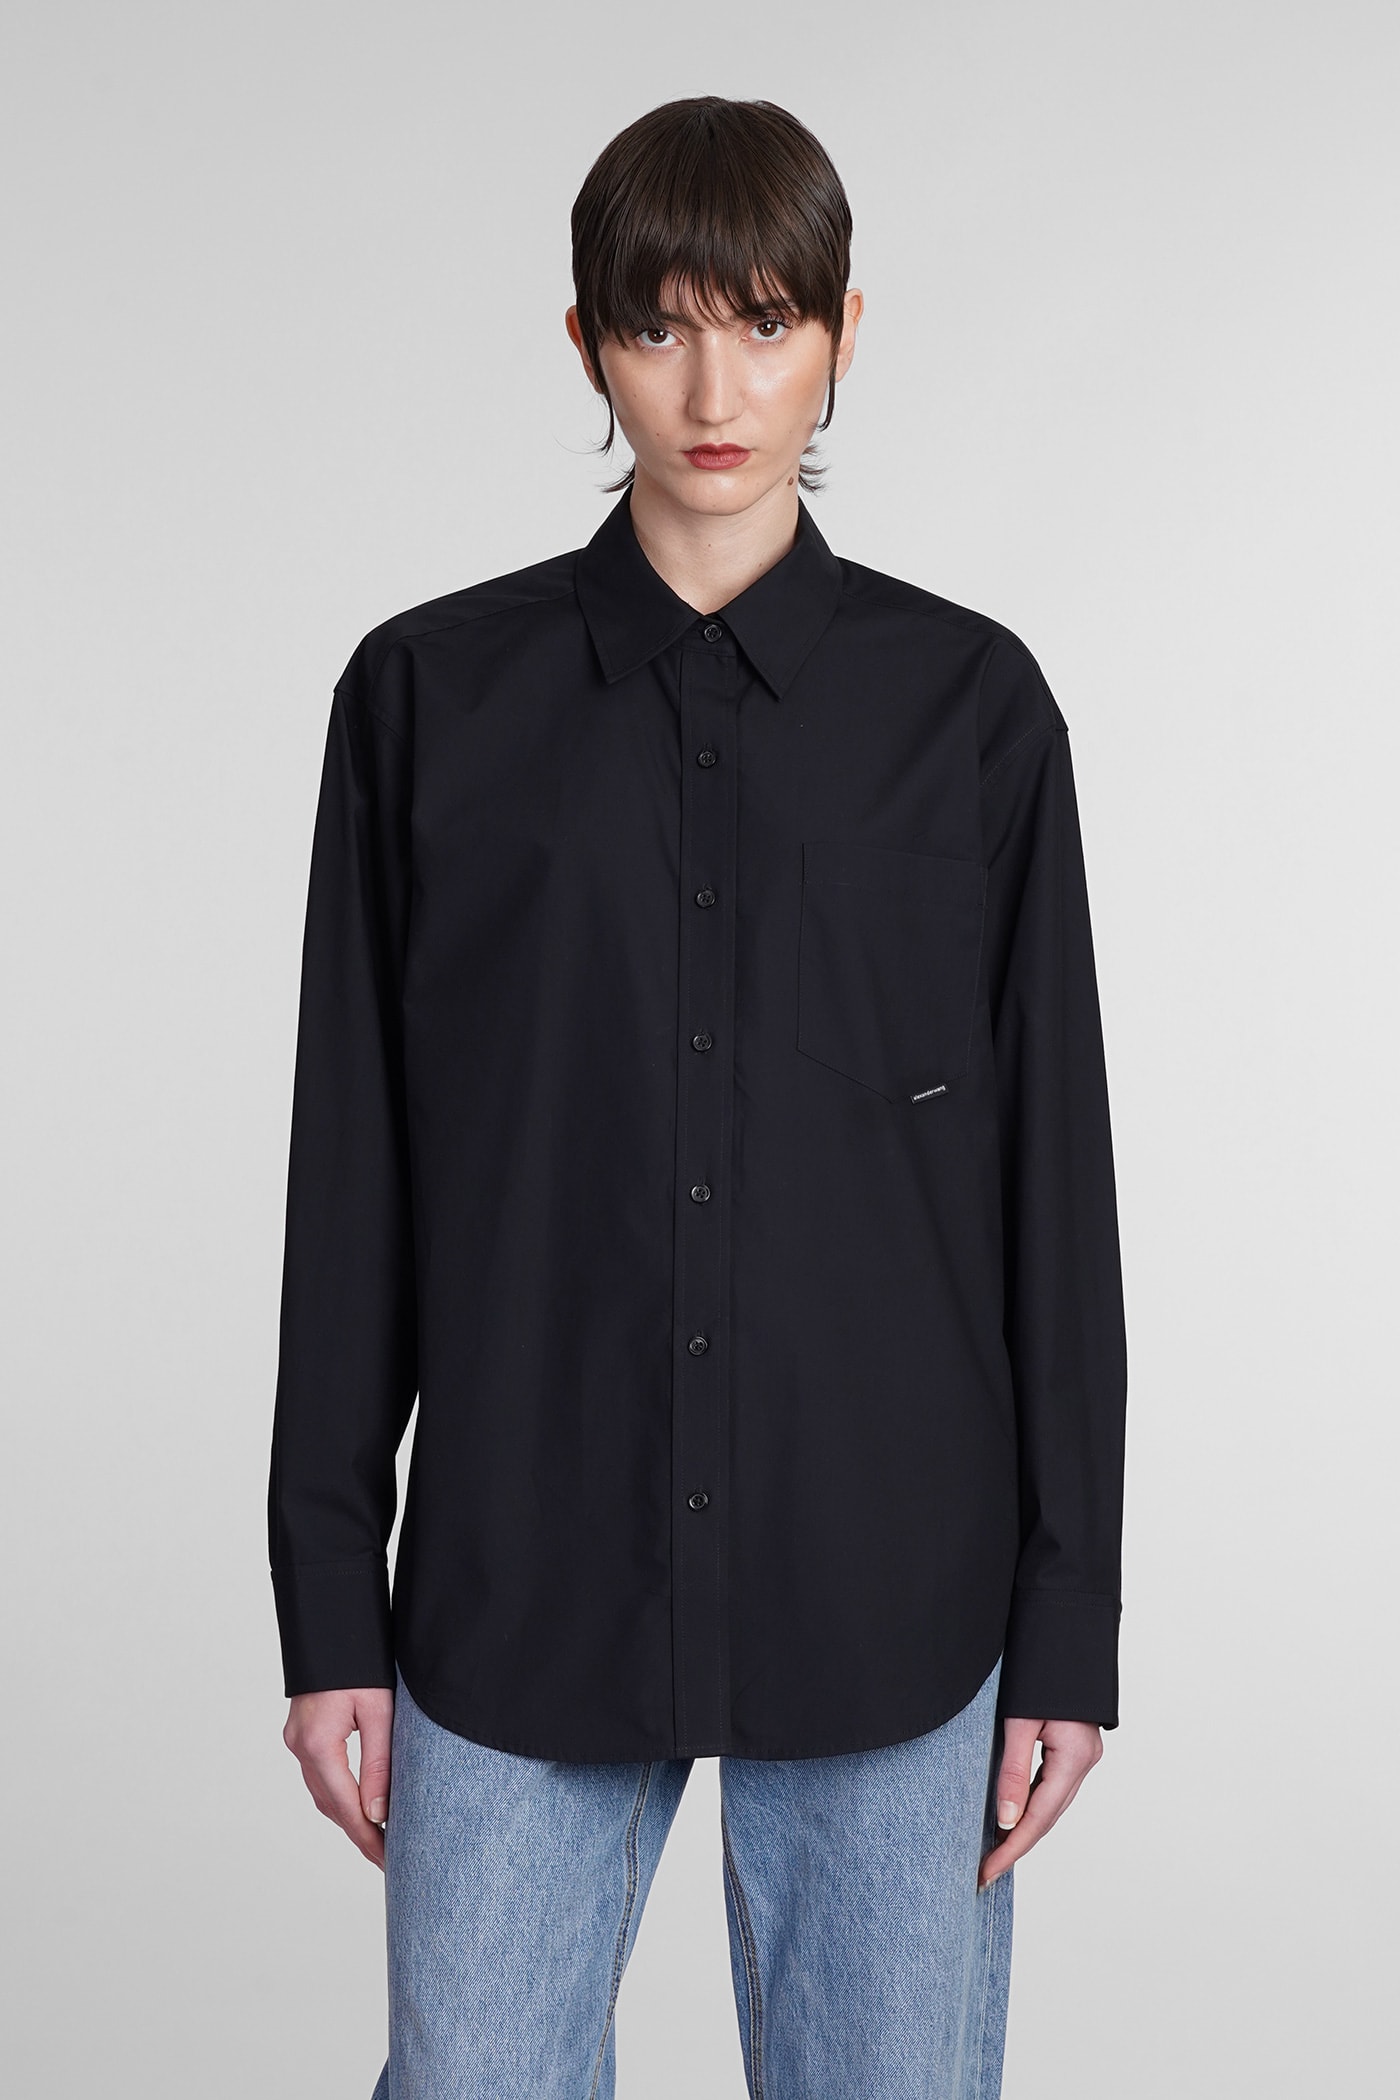 Alexander Wang Shirt In Black Cotton